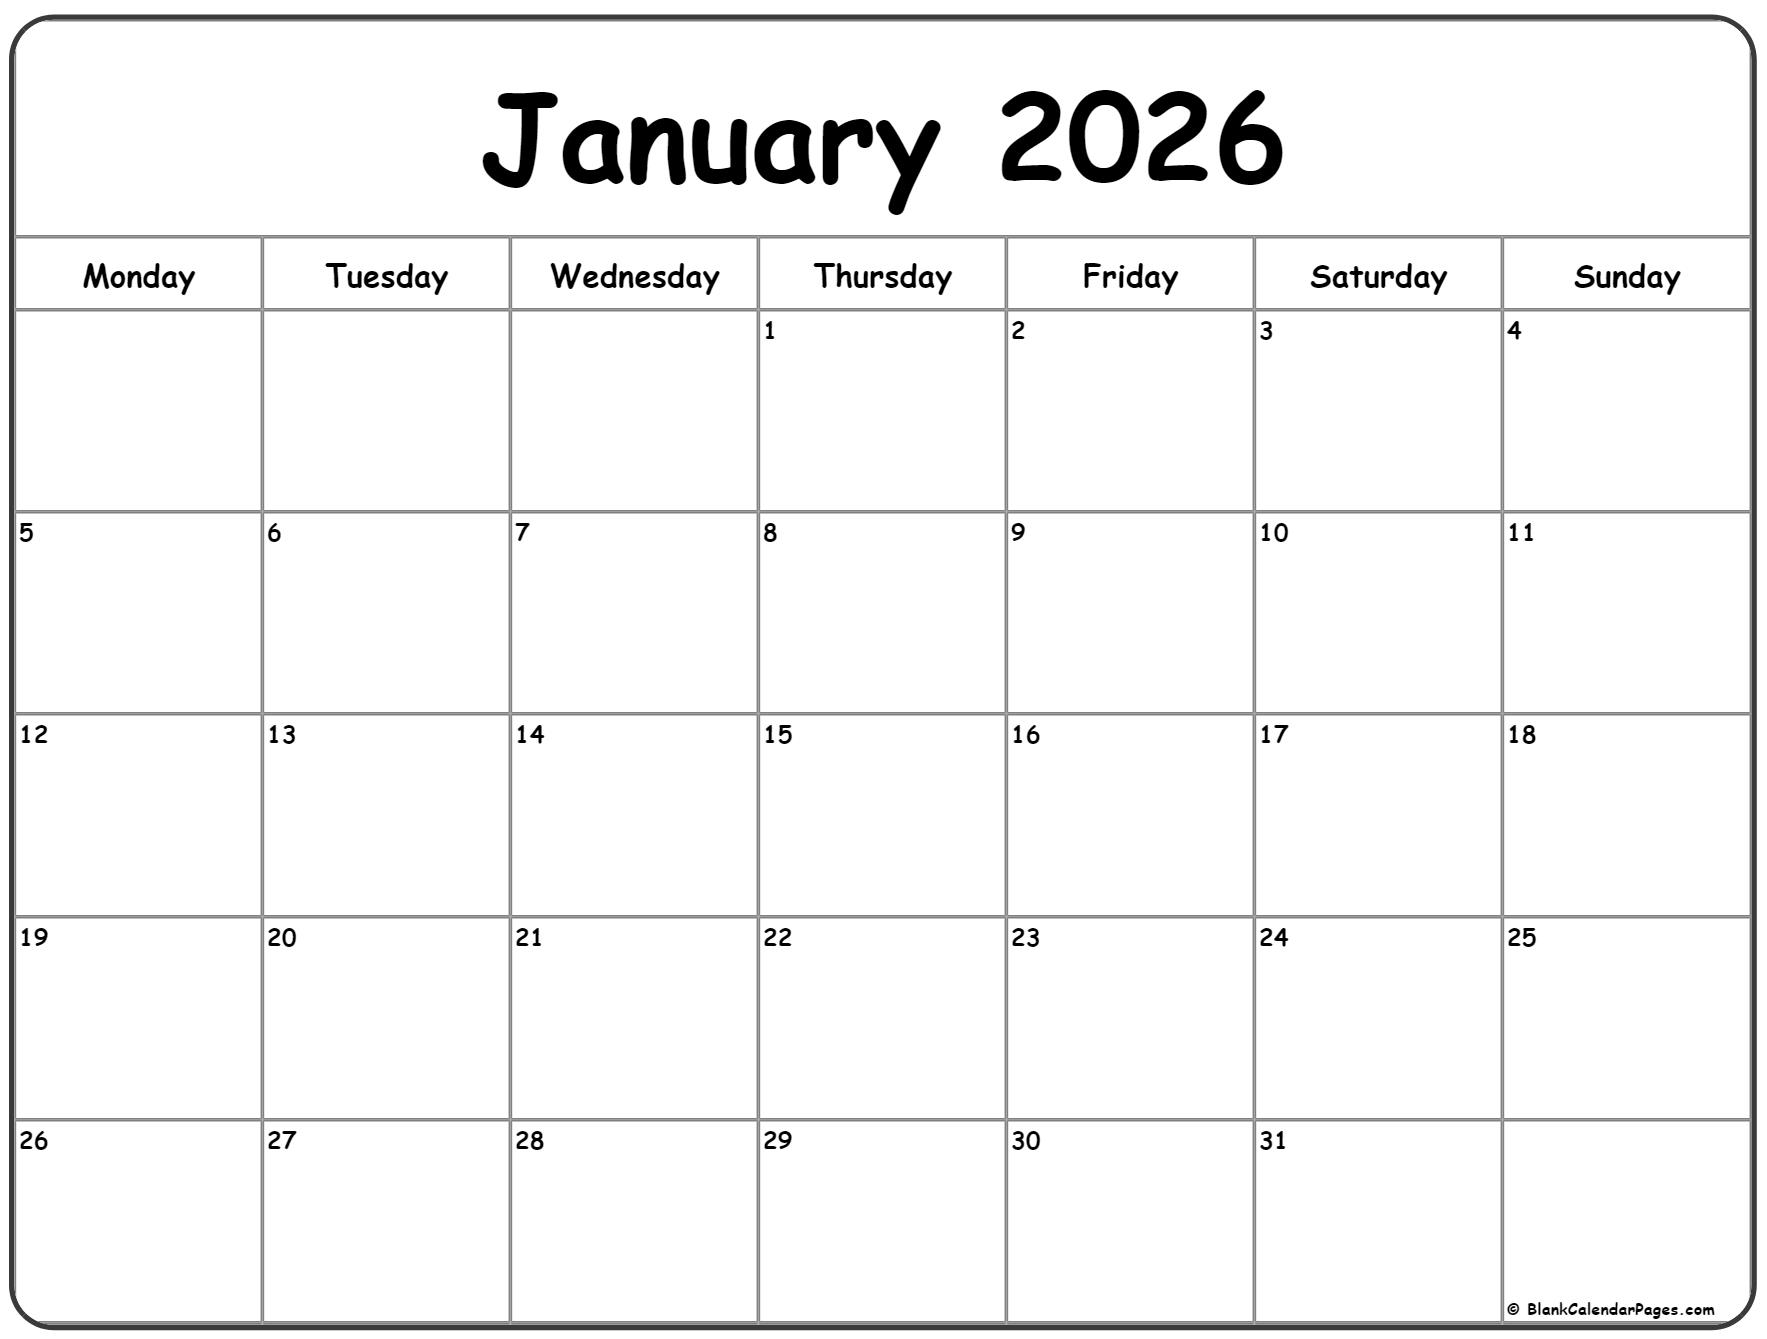 January 2026 Monday calendar. Monday to Sunday